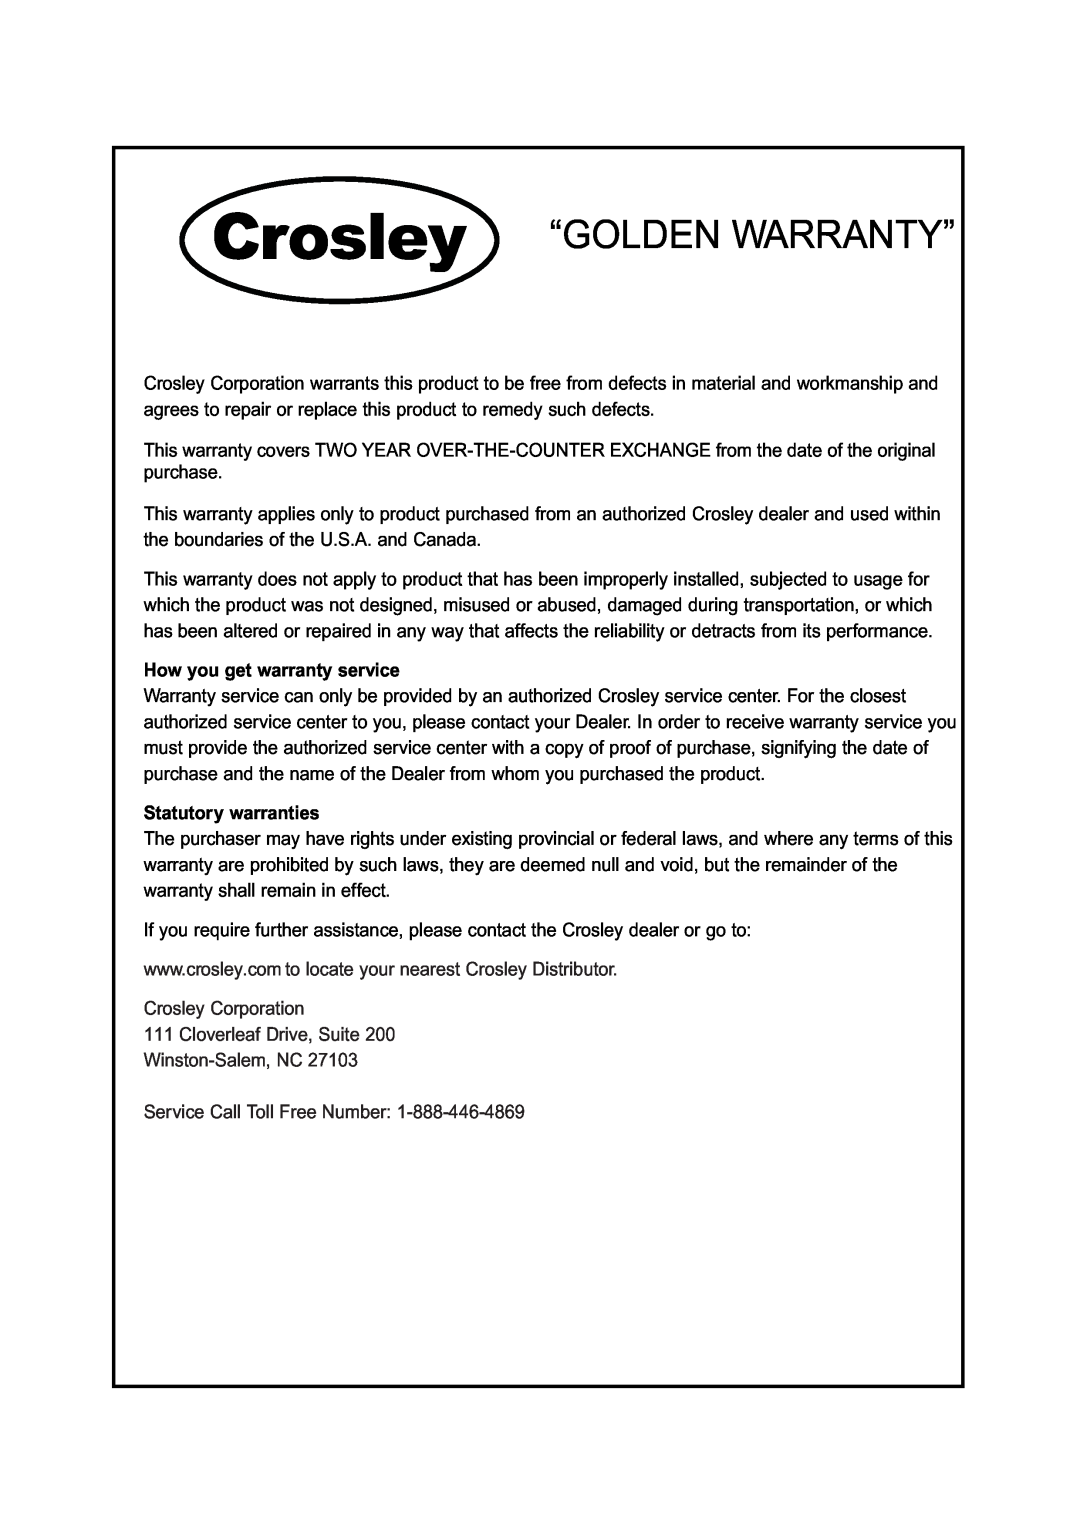 Crosley C42FHDHB120 “Golden Warranty”, How you get warranty service, Statutory warranties, Service Call Toll Free Number 